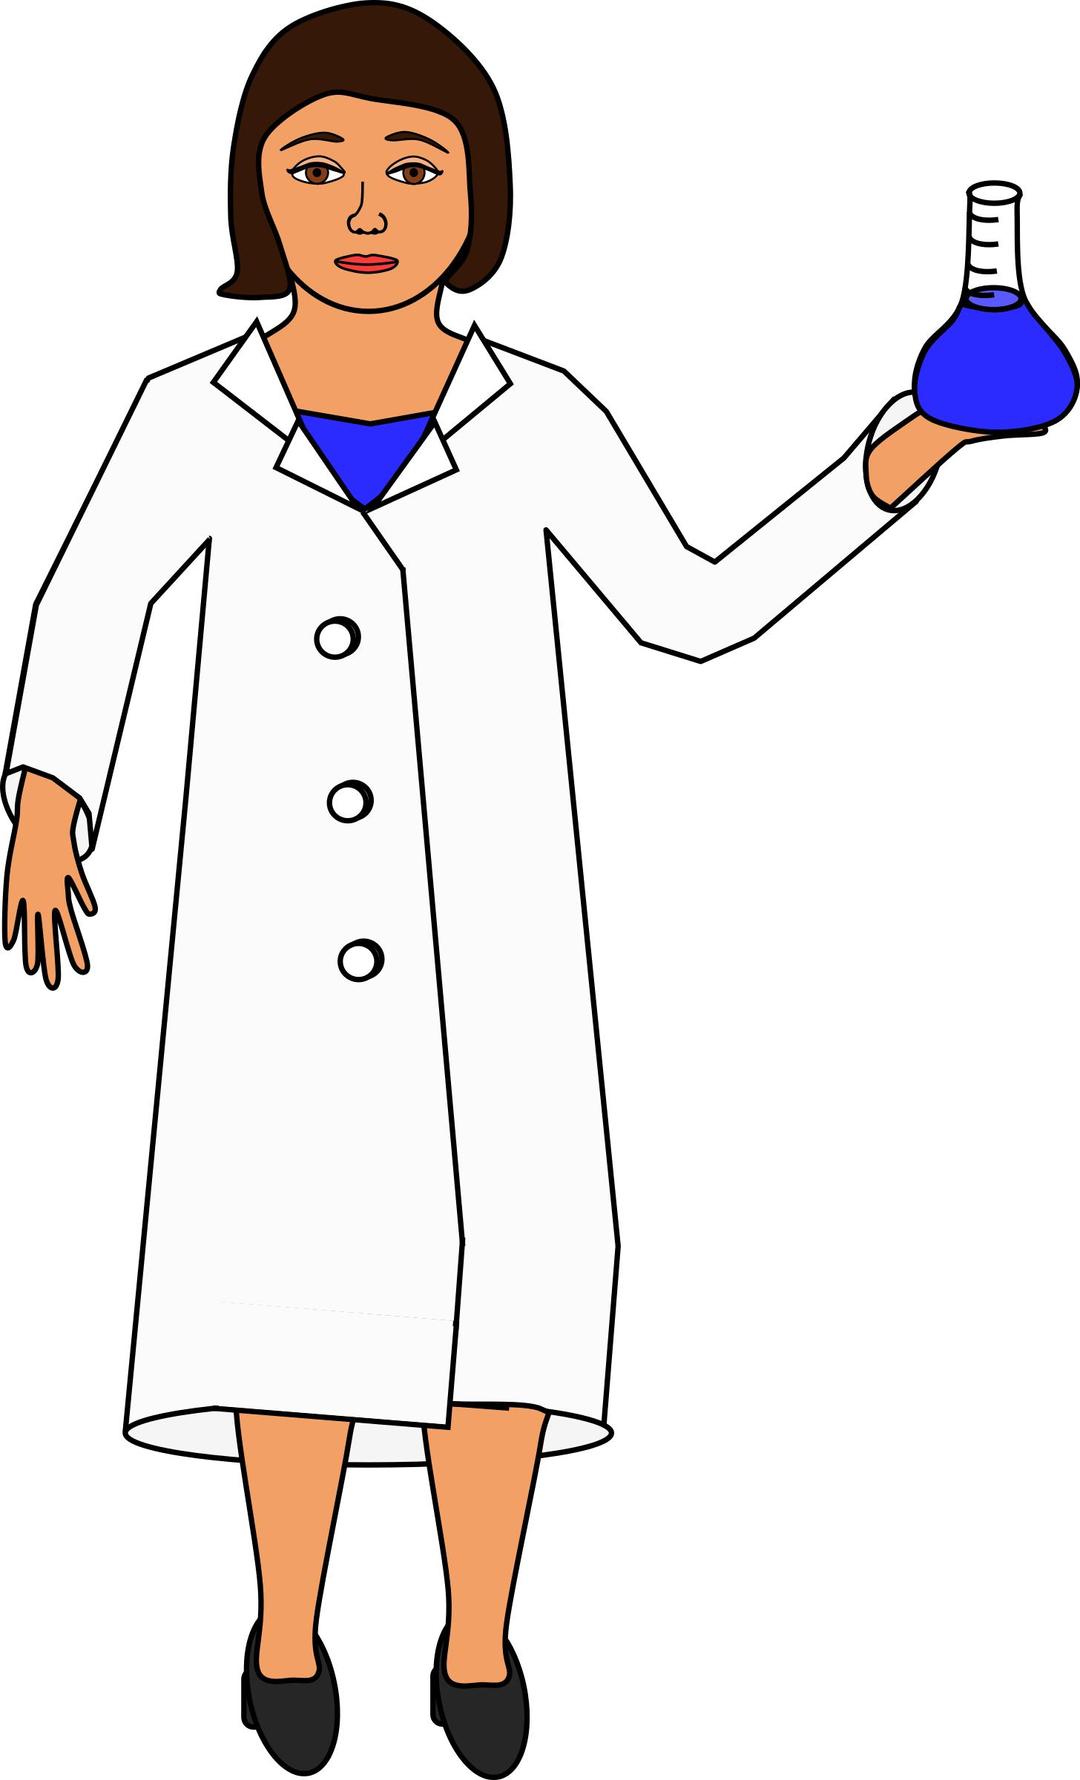 Scientist holding an erlenmeyer flask png transparent